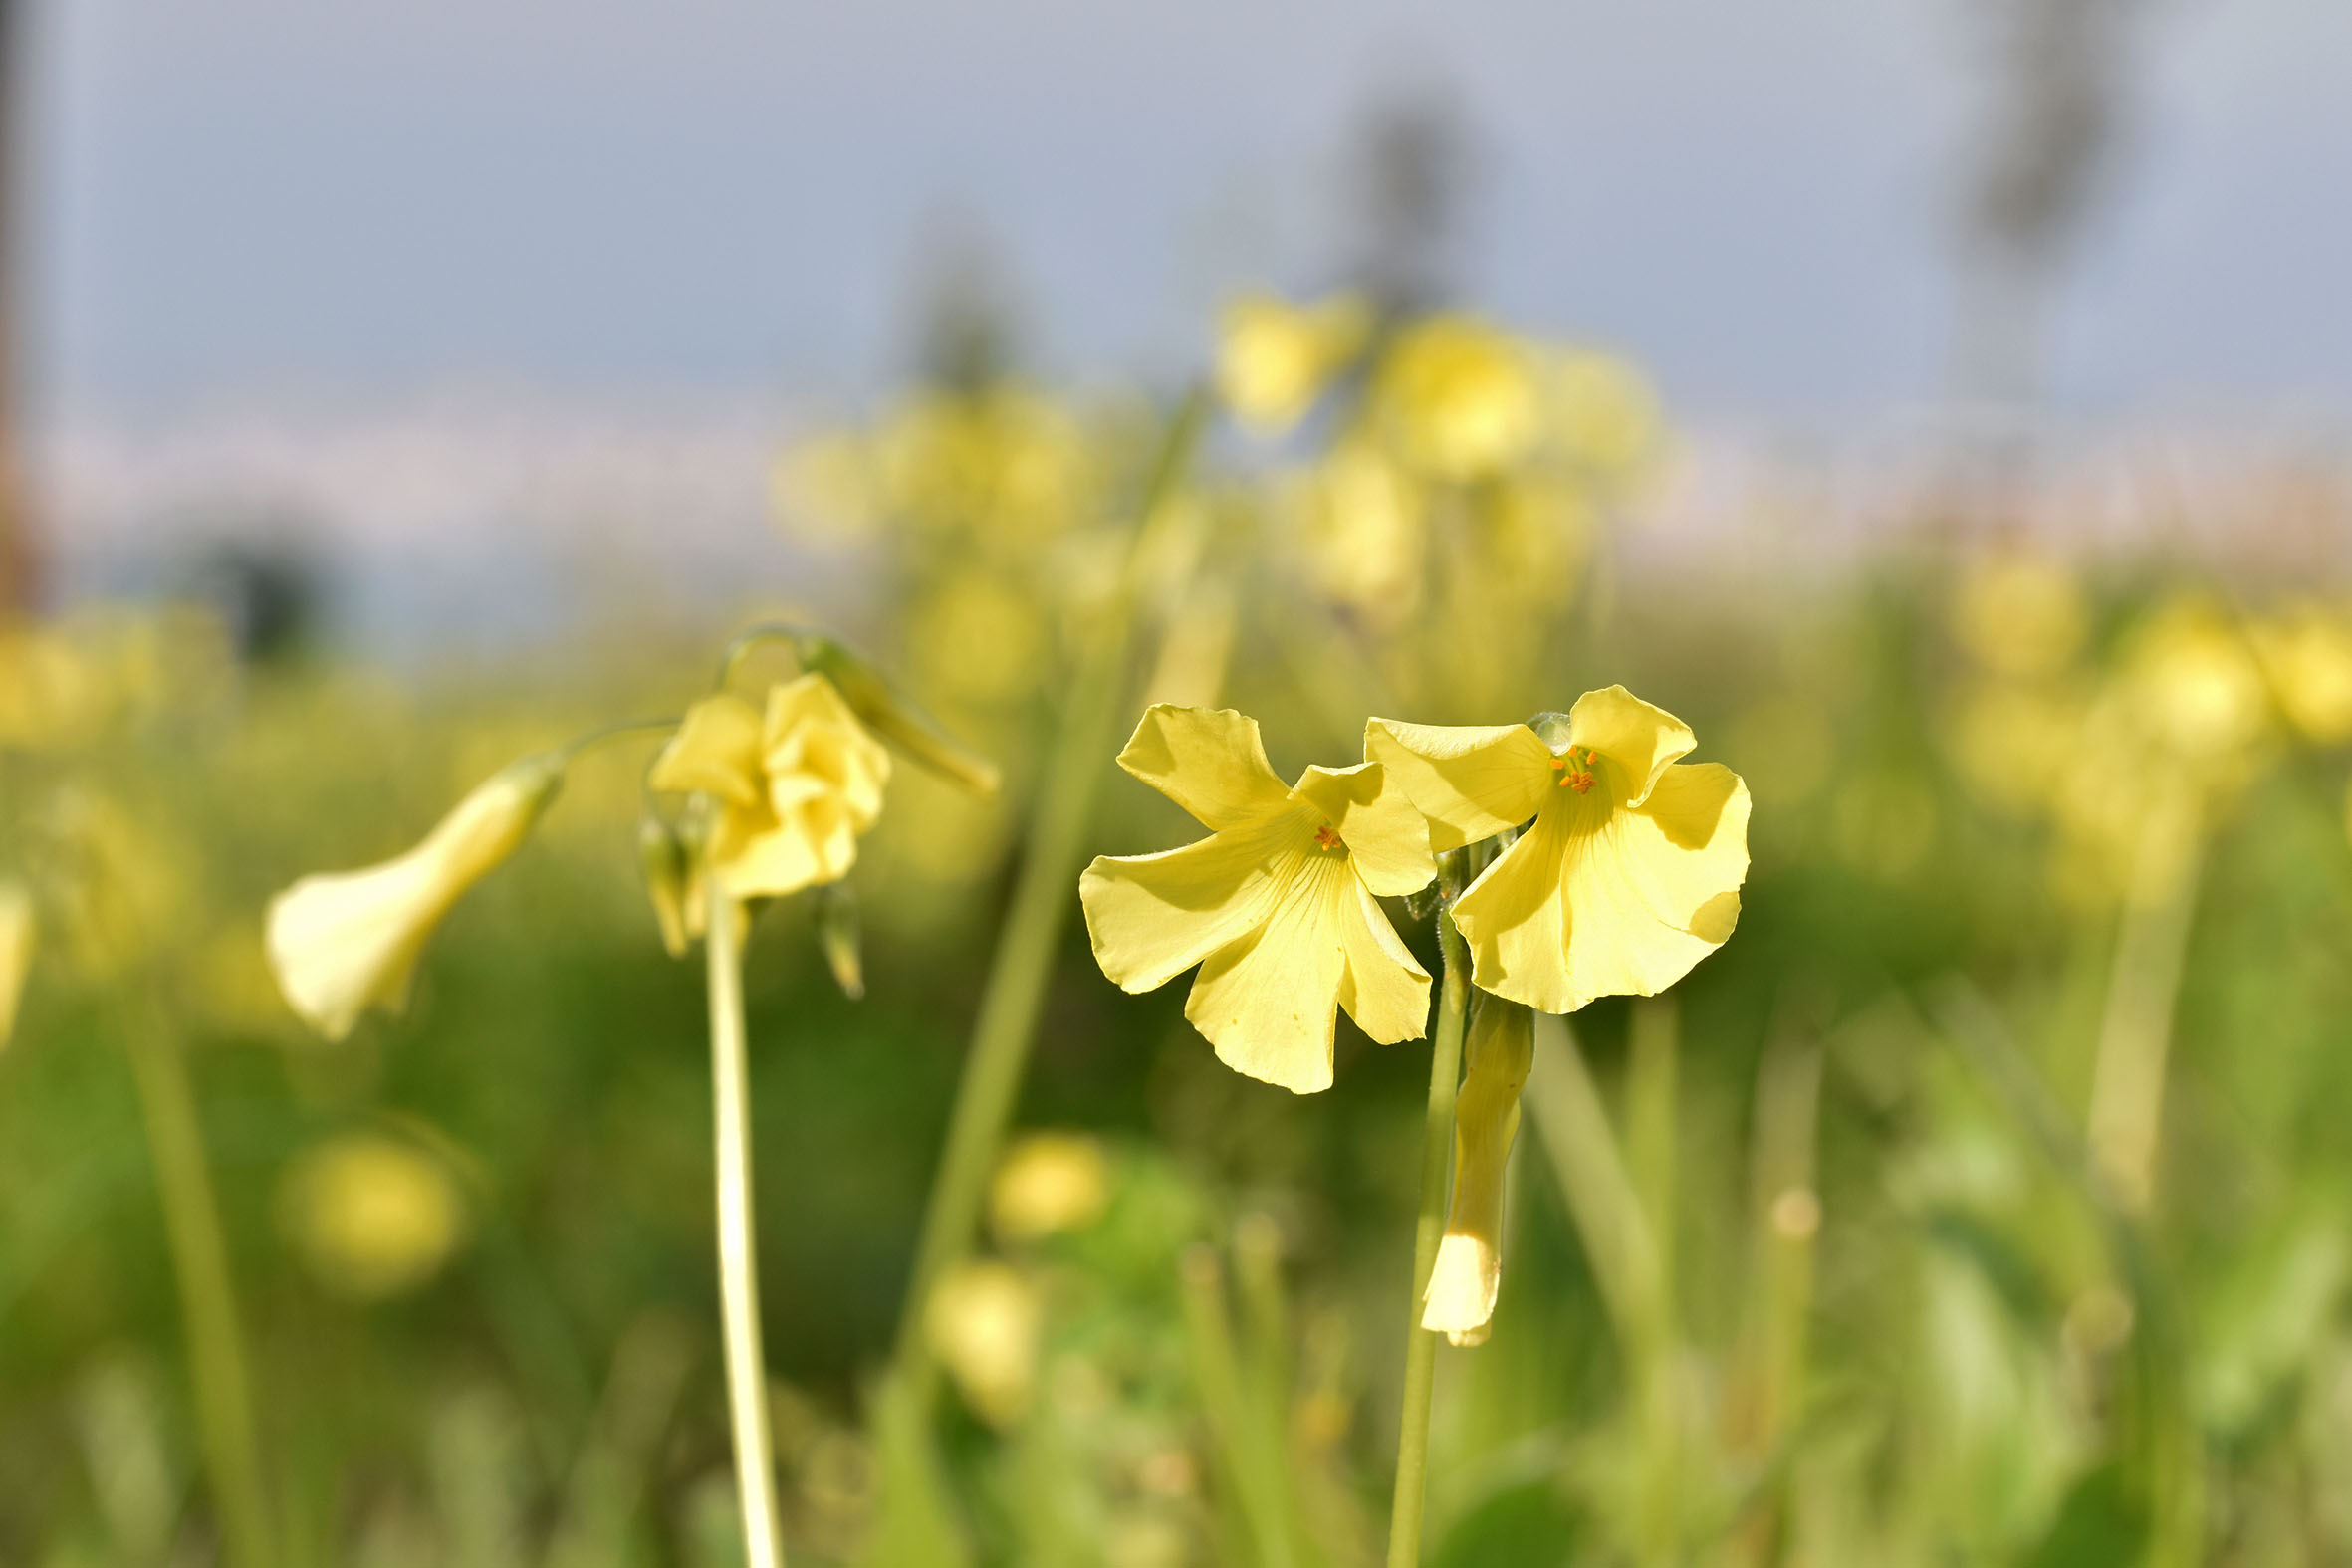 Oxalis yellow flower park 1.jpg